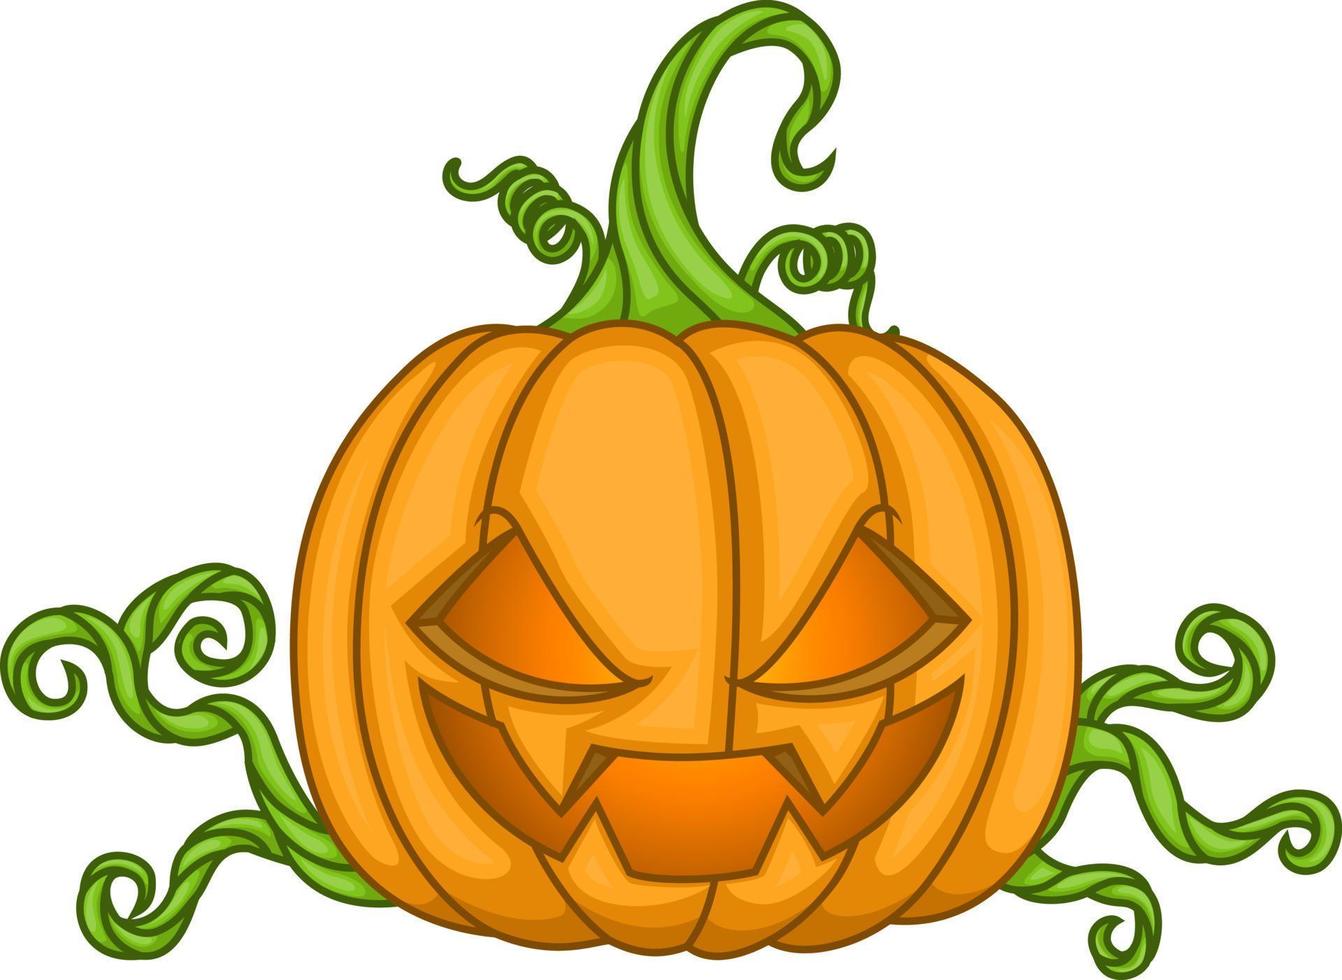 Cartoon Halloween pumpkin with scary face vector